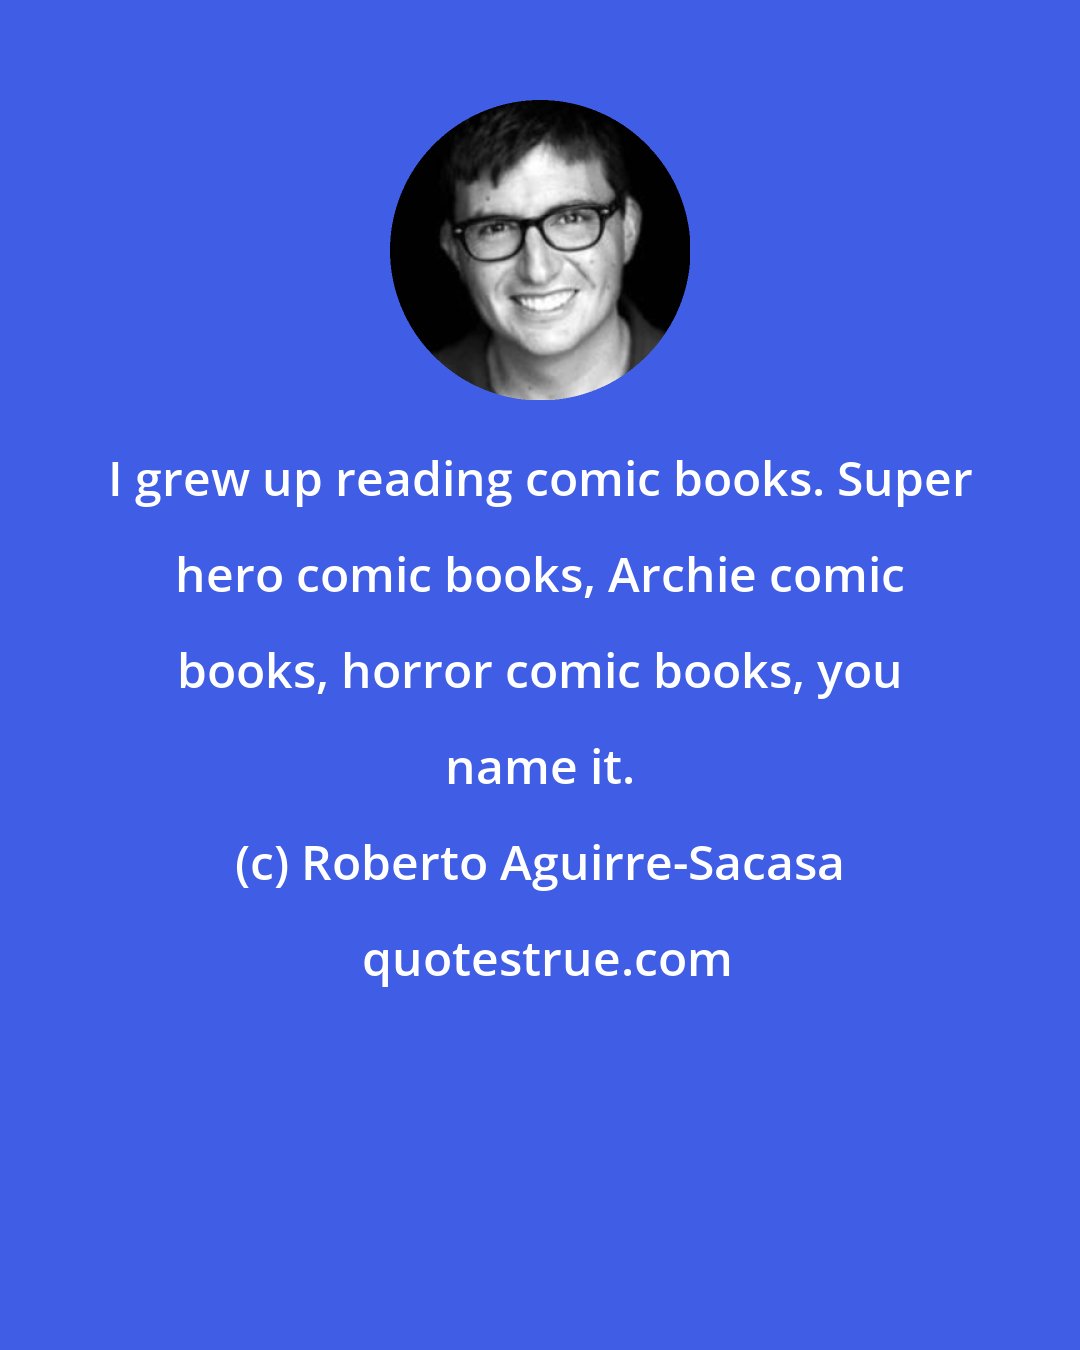 Roberto Aguirre-Sacasa: I grew up reading comic books. Super hero comic books, Archie comic books, horror comic books, you name it.